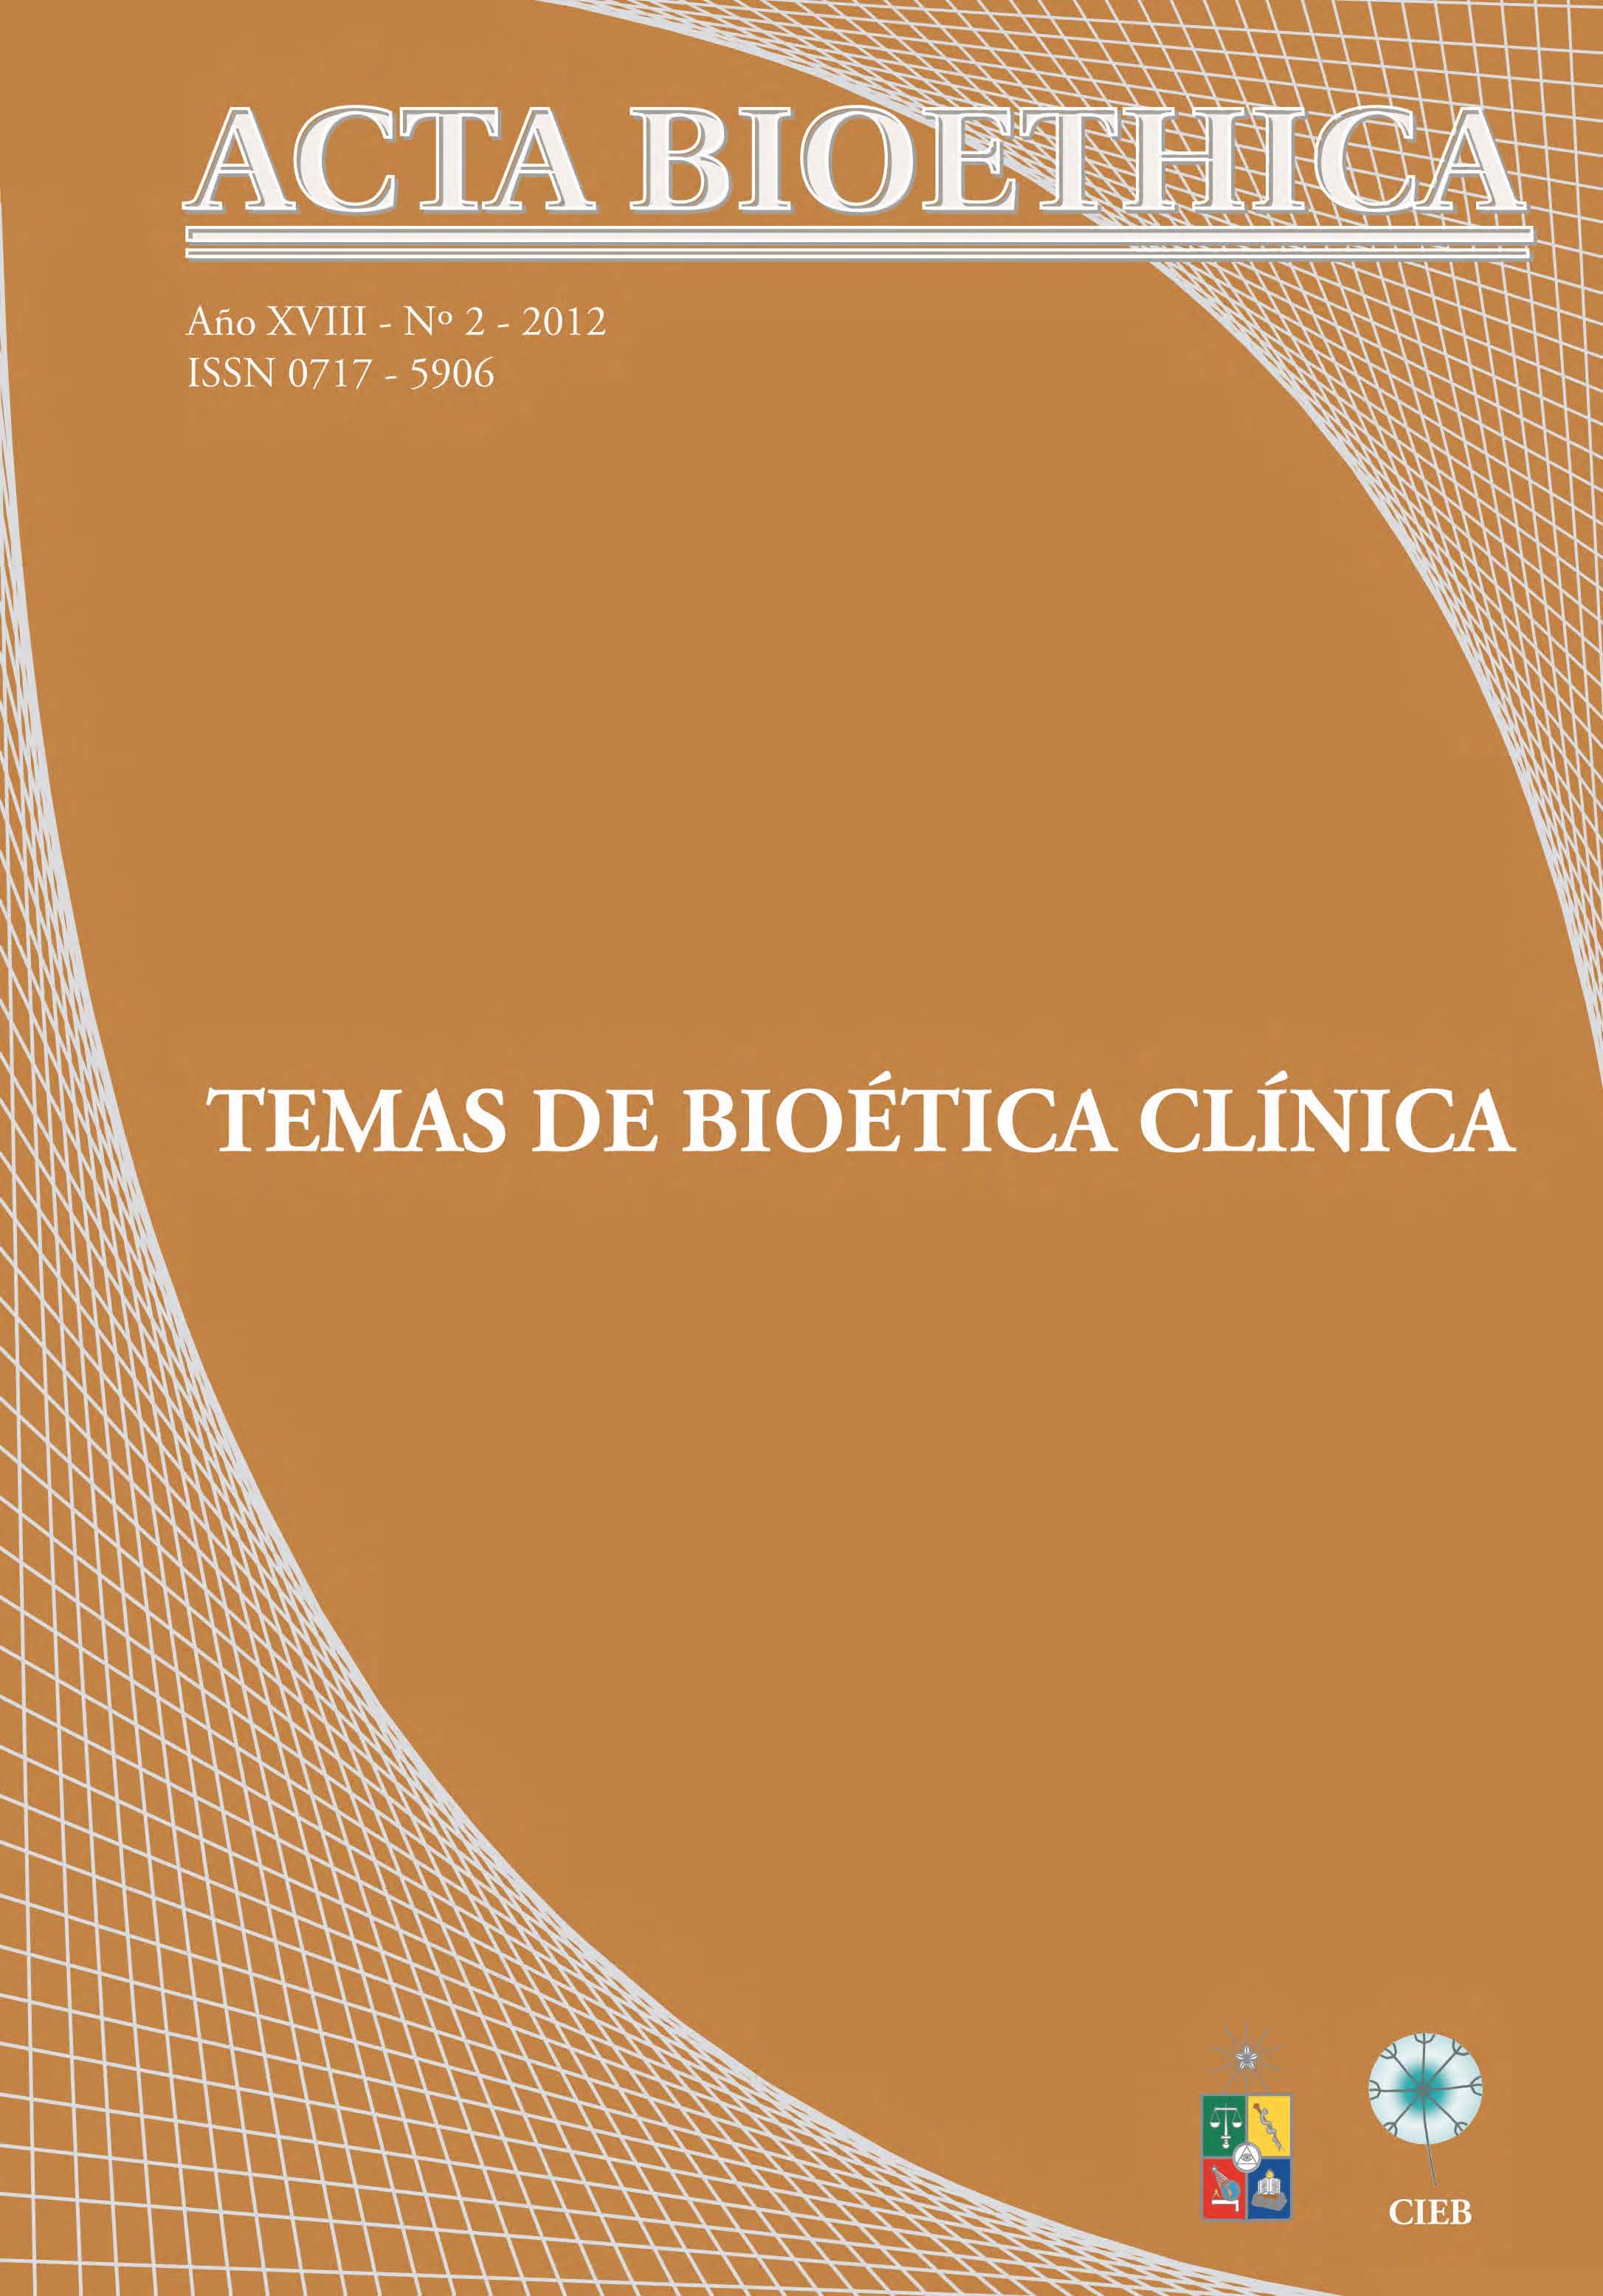 											Visualizar v. 18 n. 2 (2012): Temas de Bioética Clínica
										